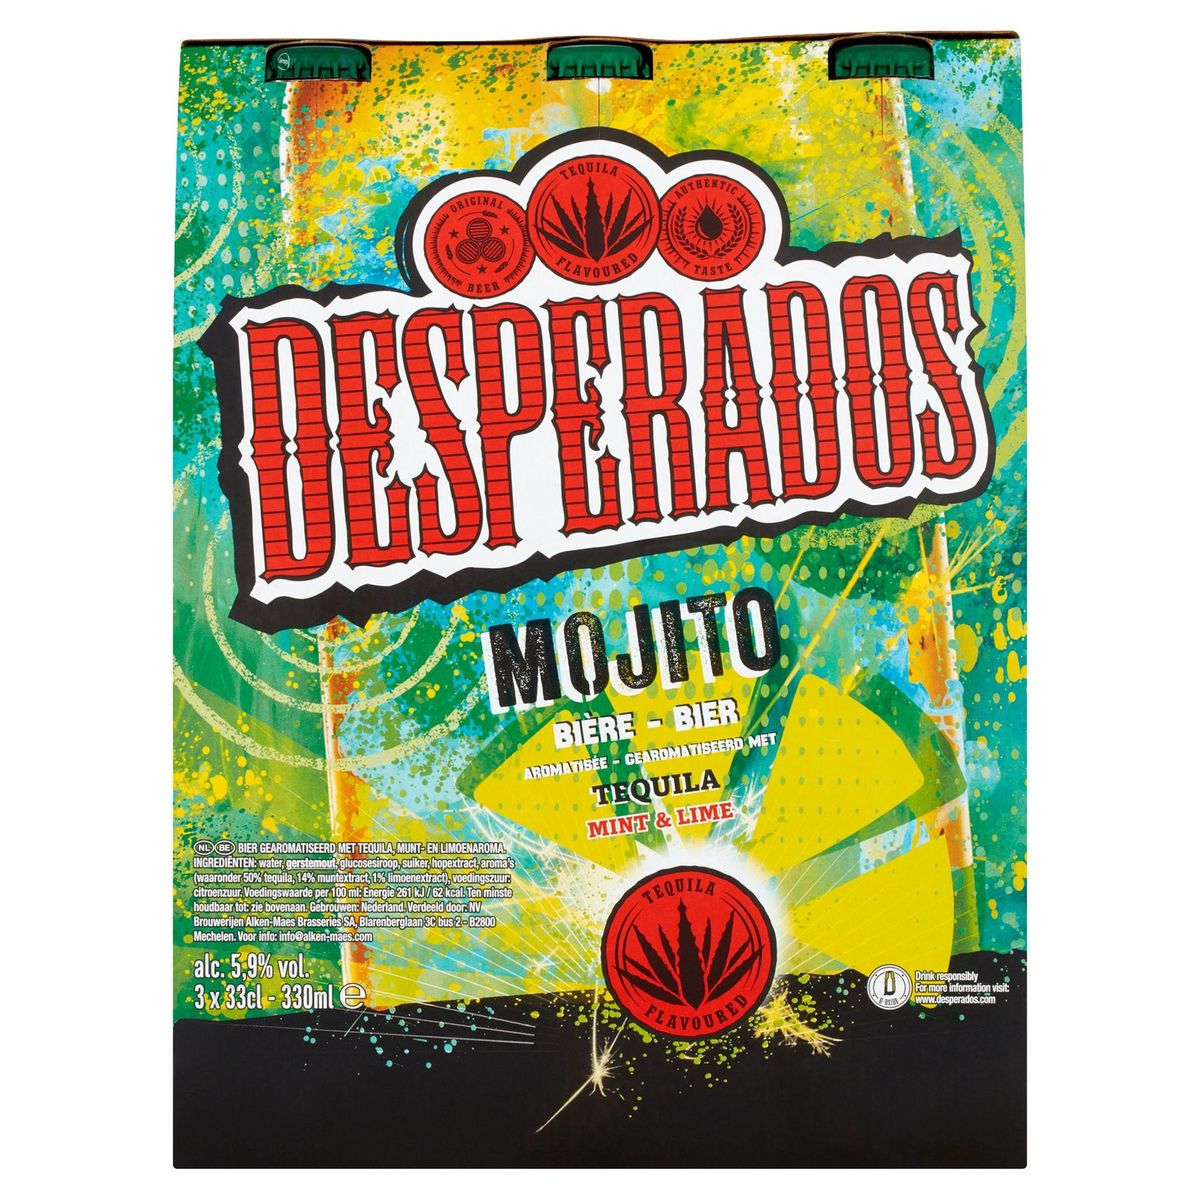 Desperados Bière Tequila-Mojito 5.9% ALC 3 x 33 cl Bouteille